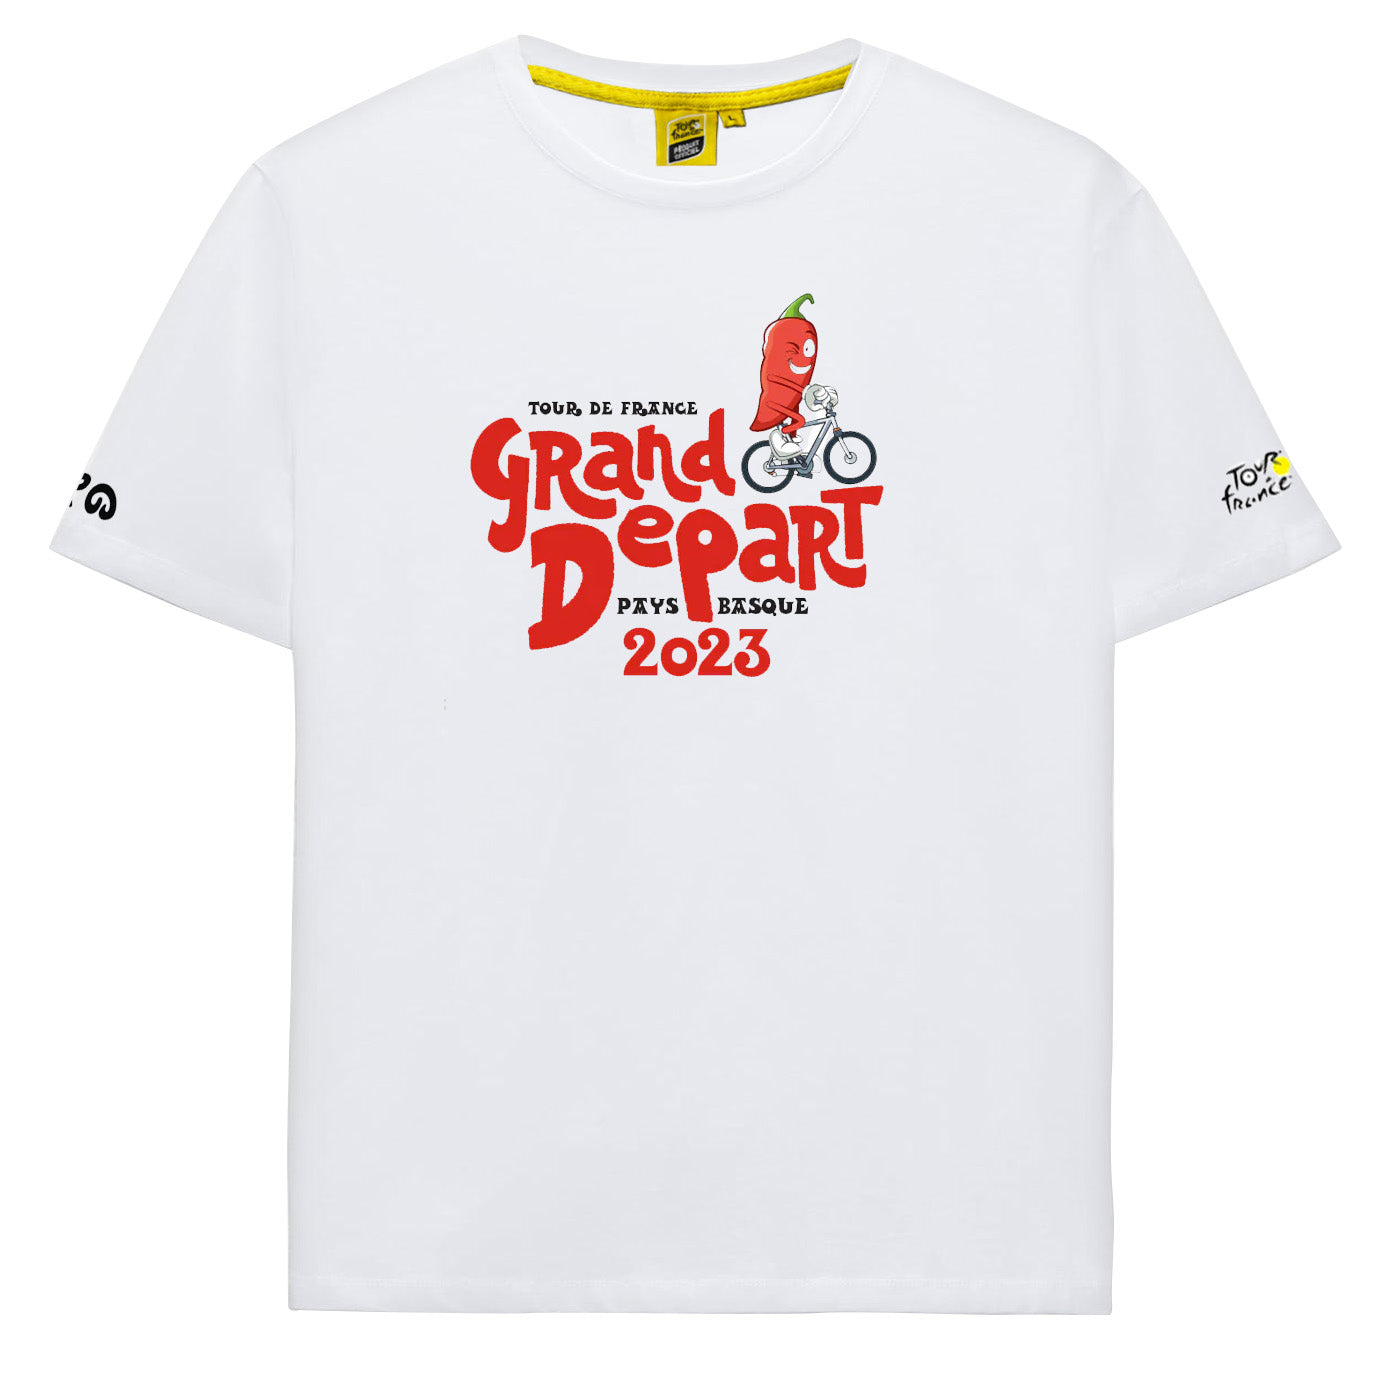 Tour de France 2023 kid t-shirt - Grand Depart Euskadi